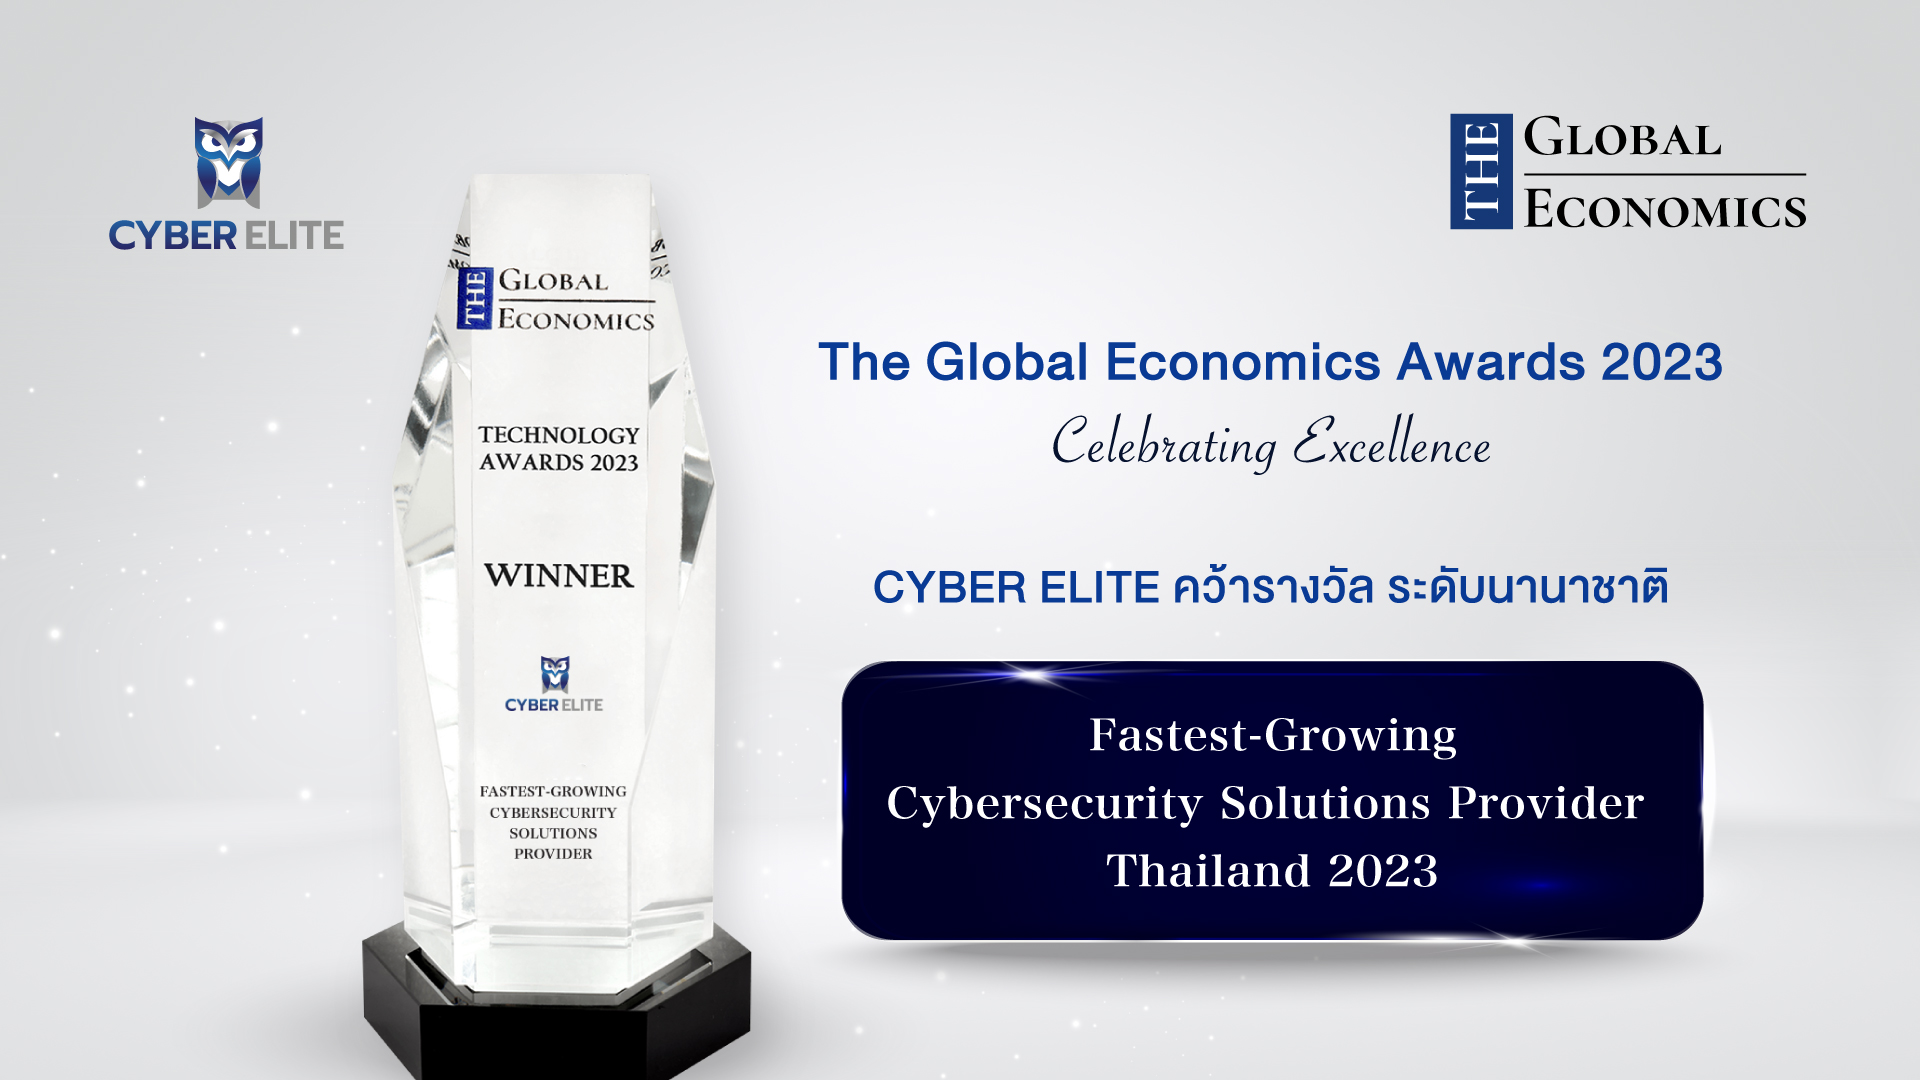 CYBER ELITE คว้ารางวัลระดับนานาชาติ จาก The Global Economics Awards 2023